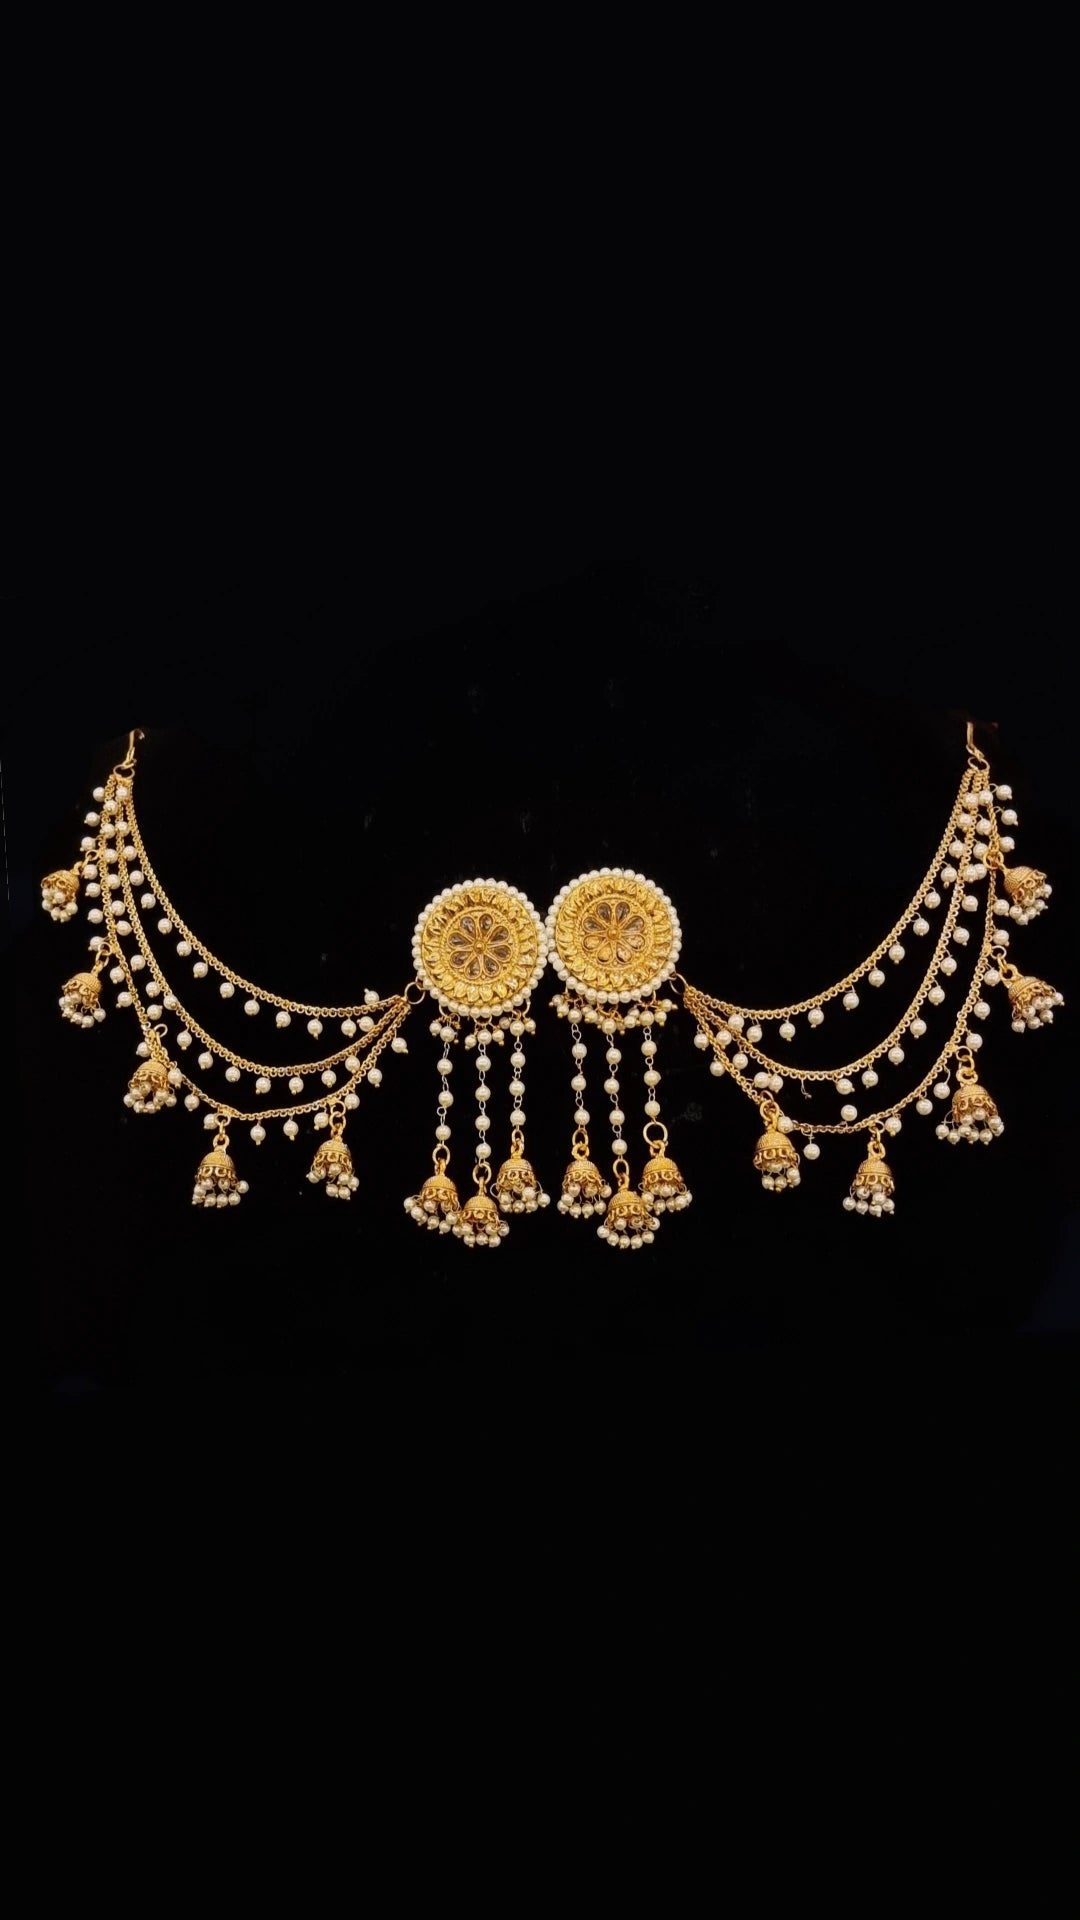 Traditional Gold-Plated Bahubali Earrings.